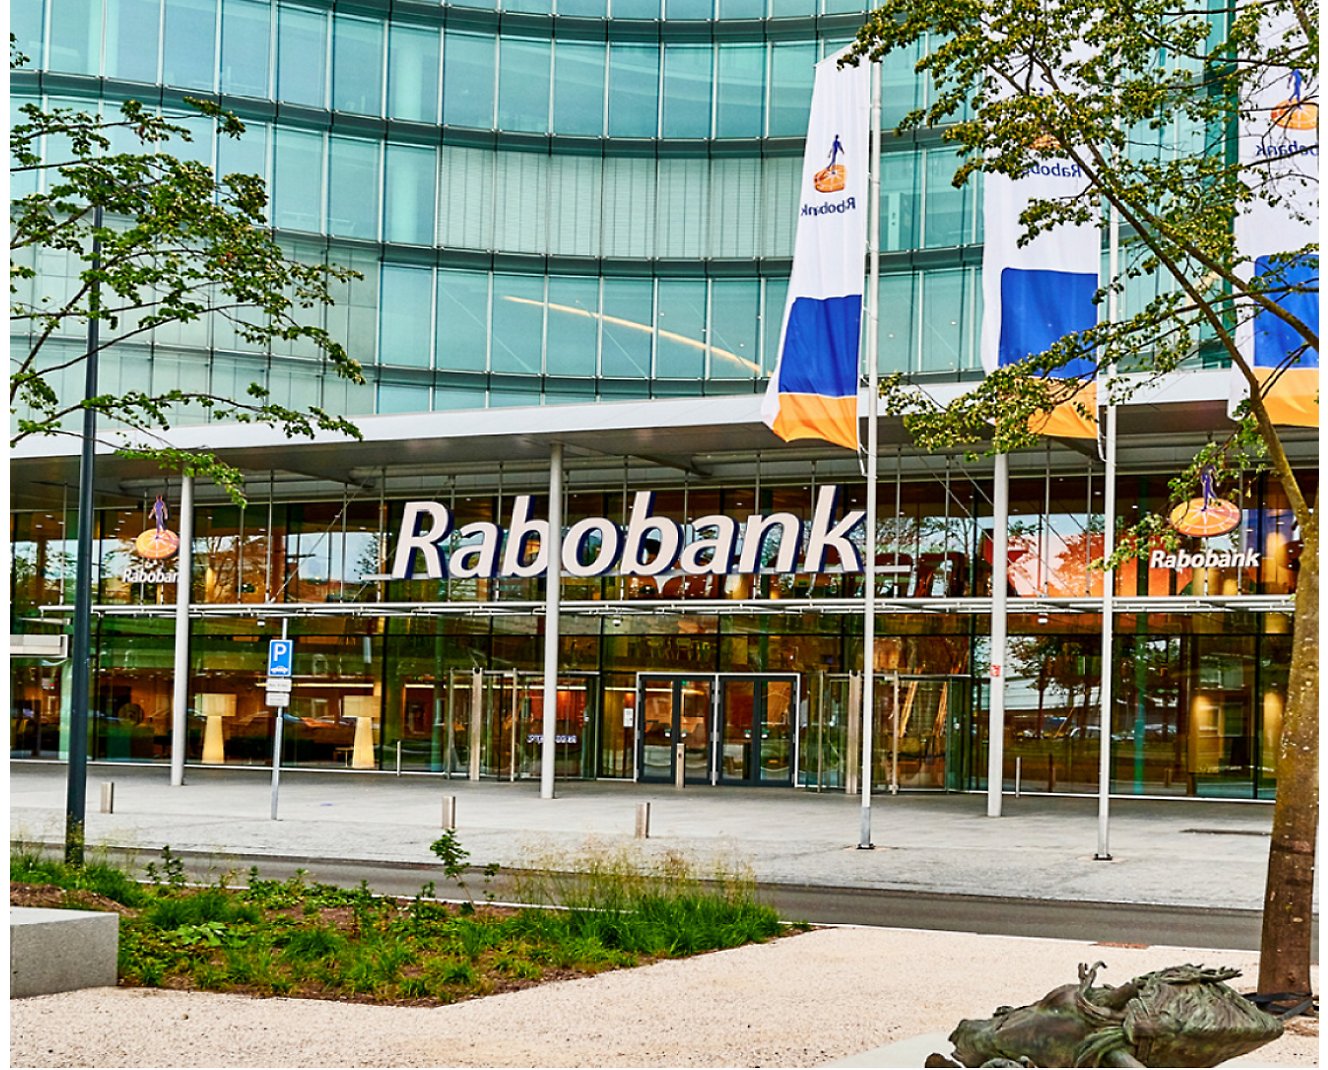 有 Rabobank 標誌的建築物。